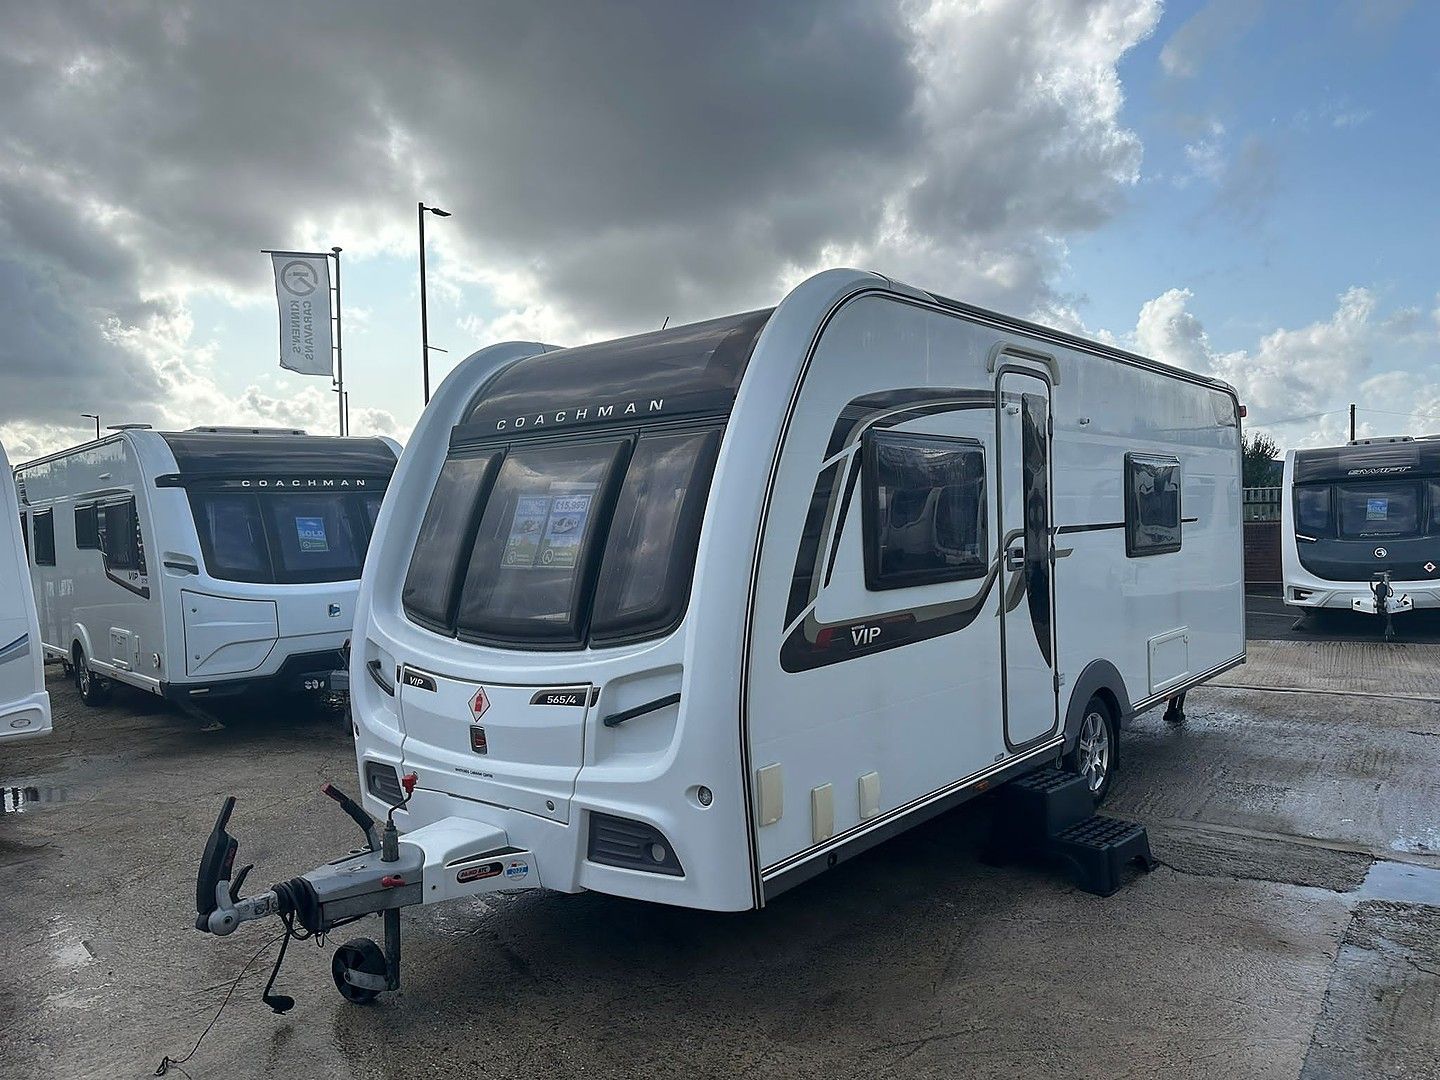 CoachmanVIP 565/4Touring Caravan for sale